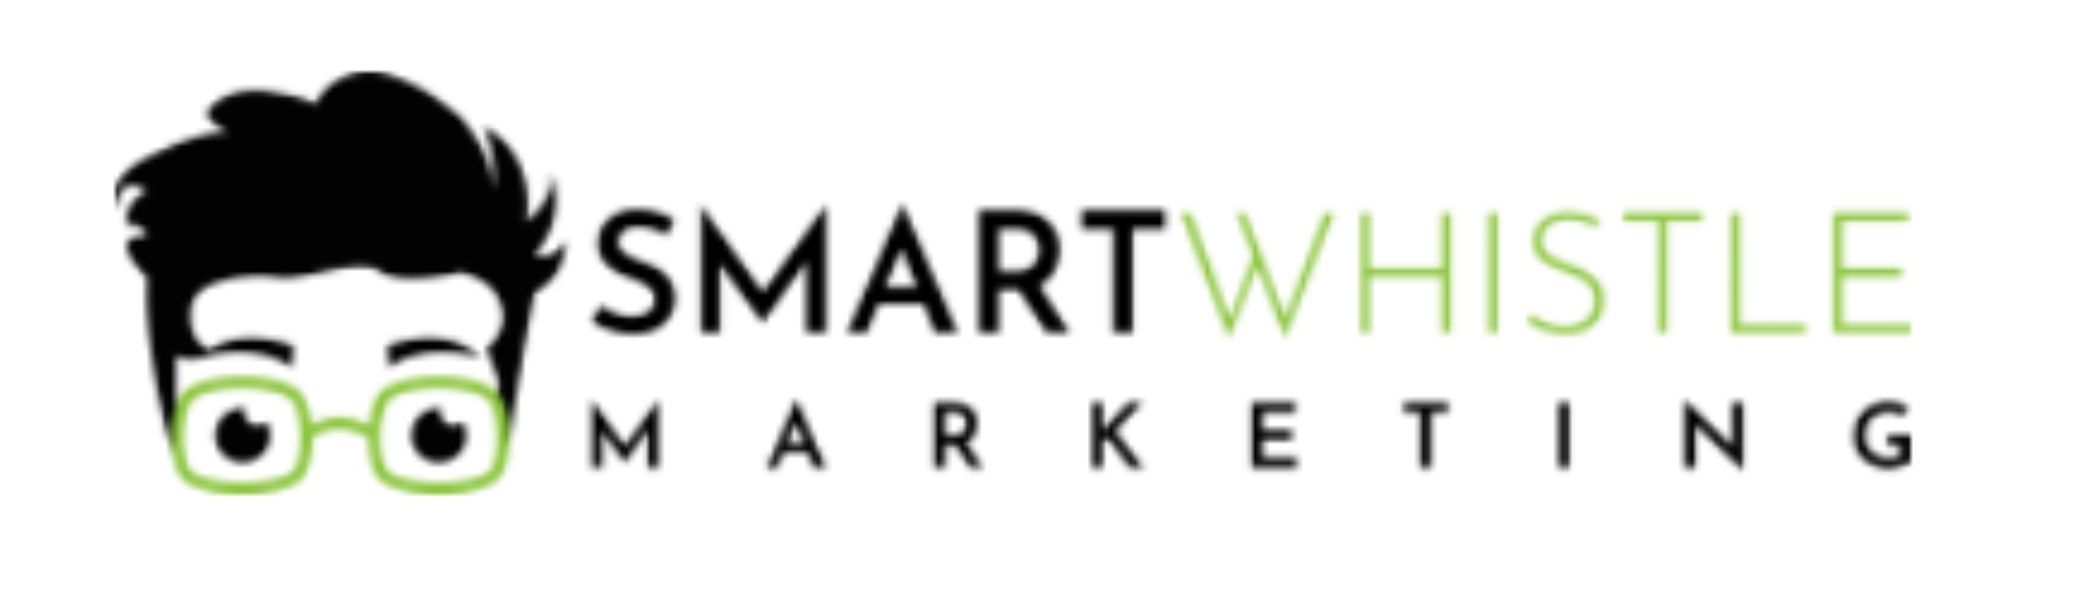 Smart Whistle Marketing LLC